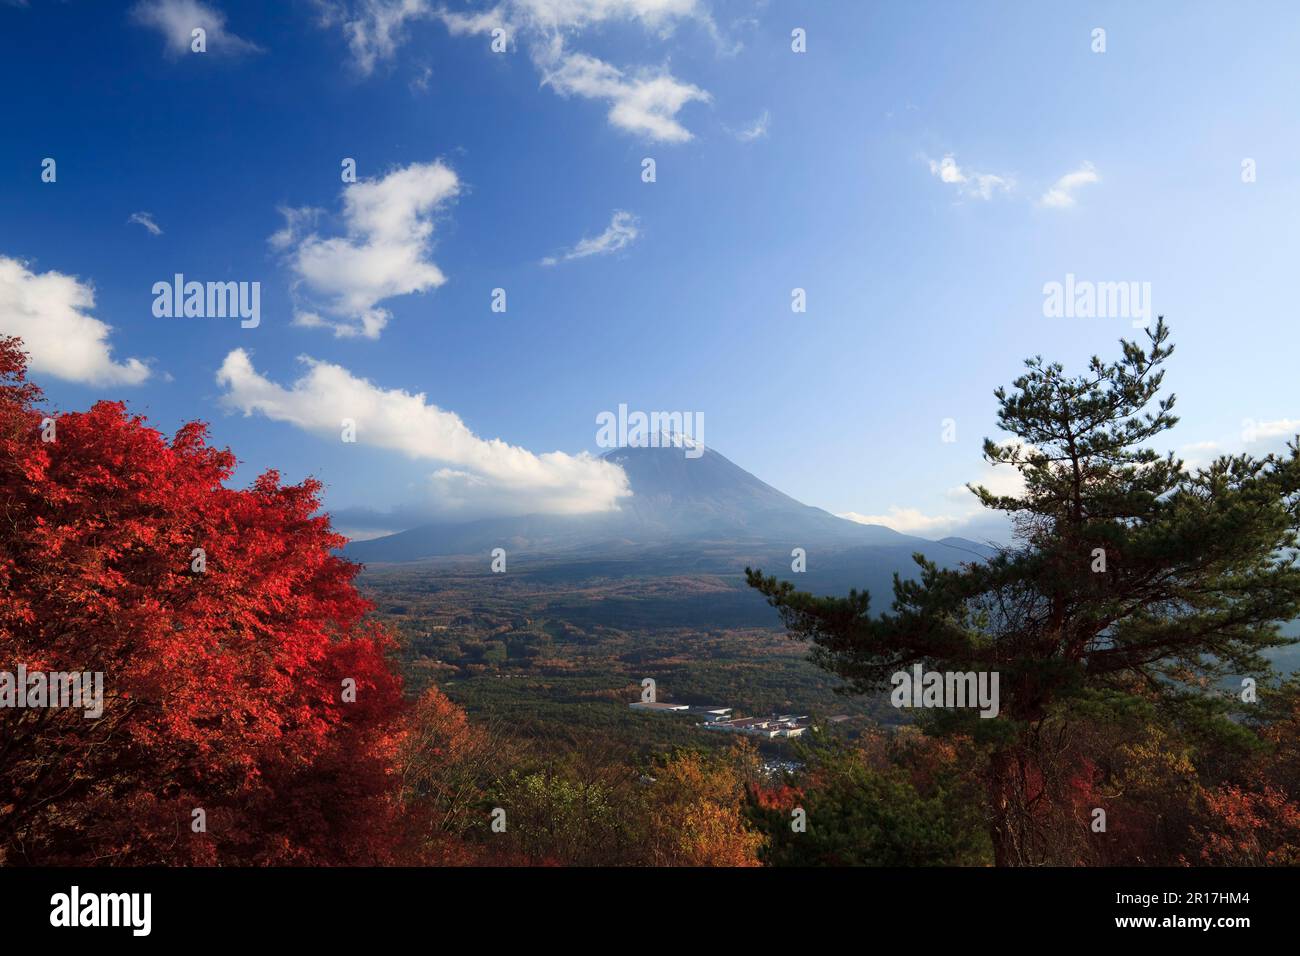 Mt. Fuji and fall foliage seen from Koyodai in Yamanashi Prefecture Stock Photo